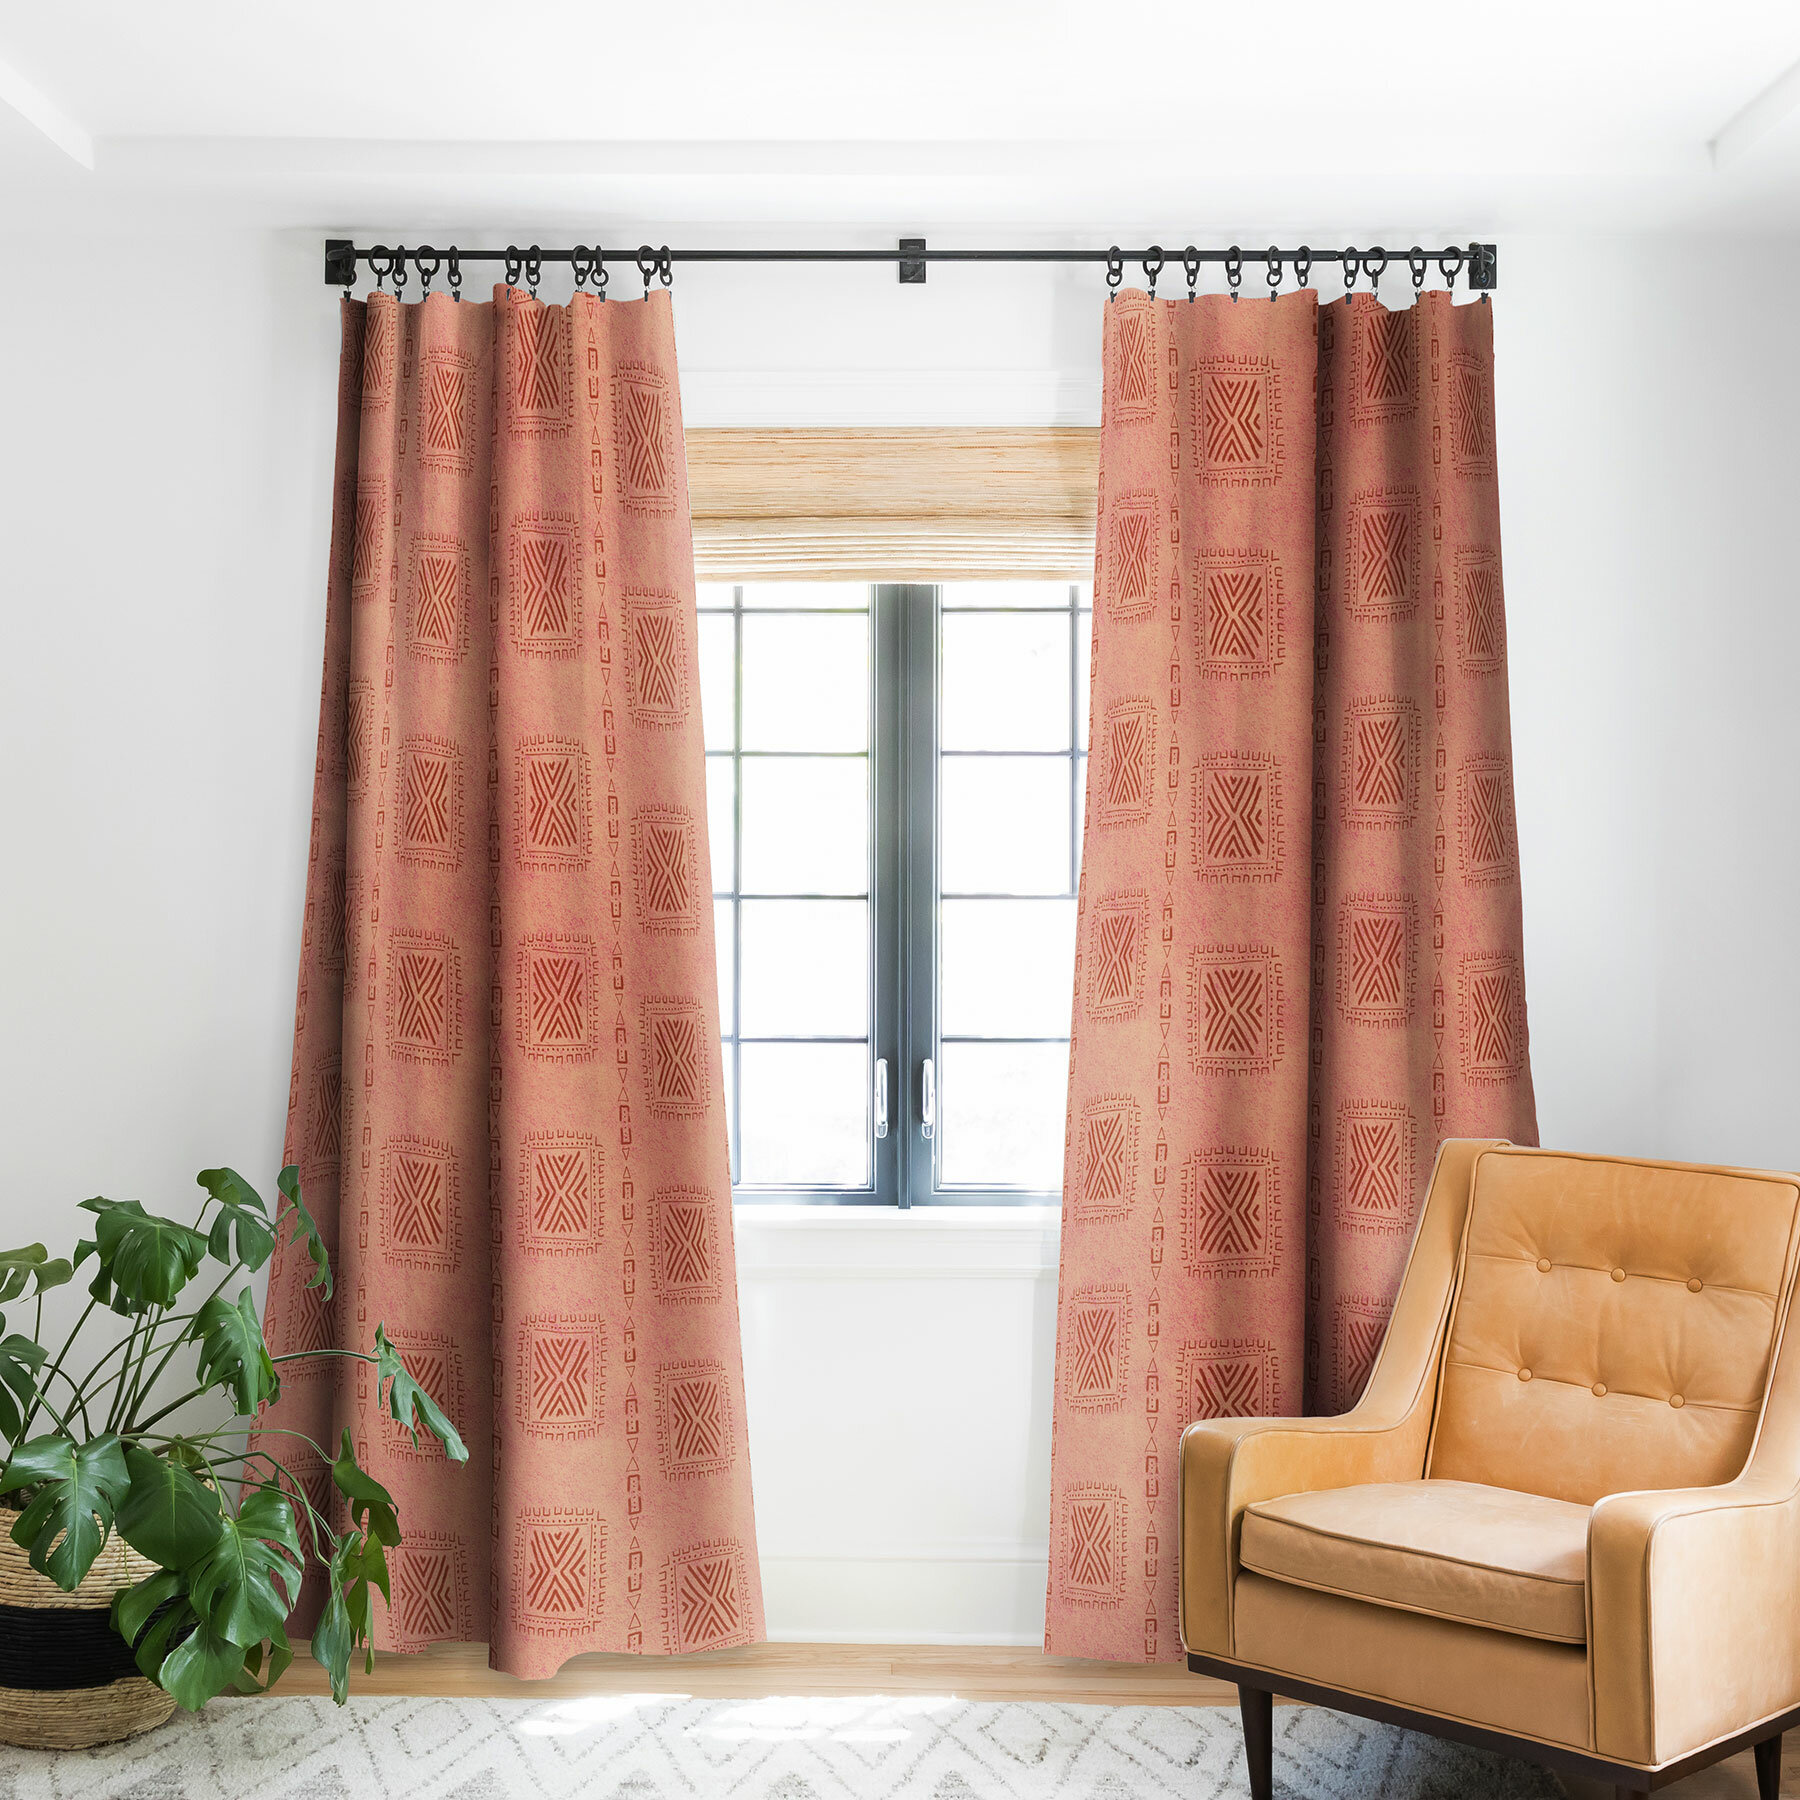 Terra Cotta Curtains - Best Decorations